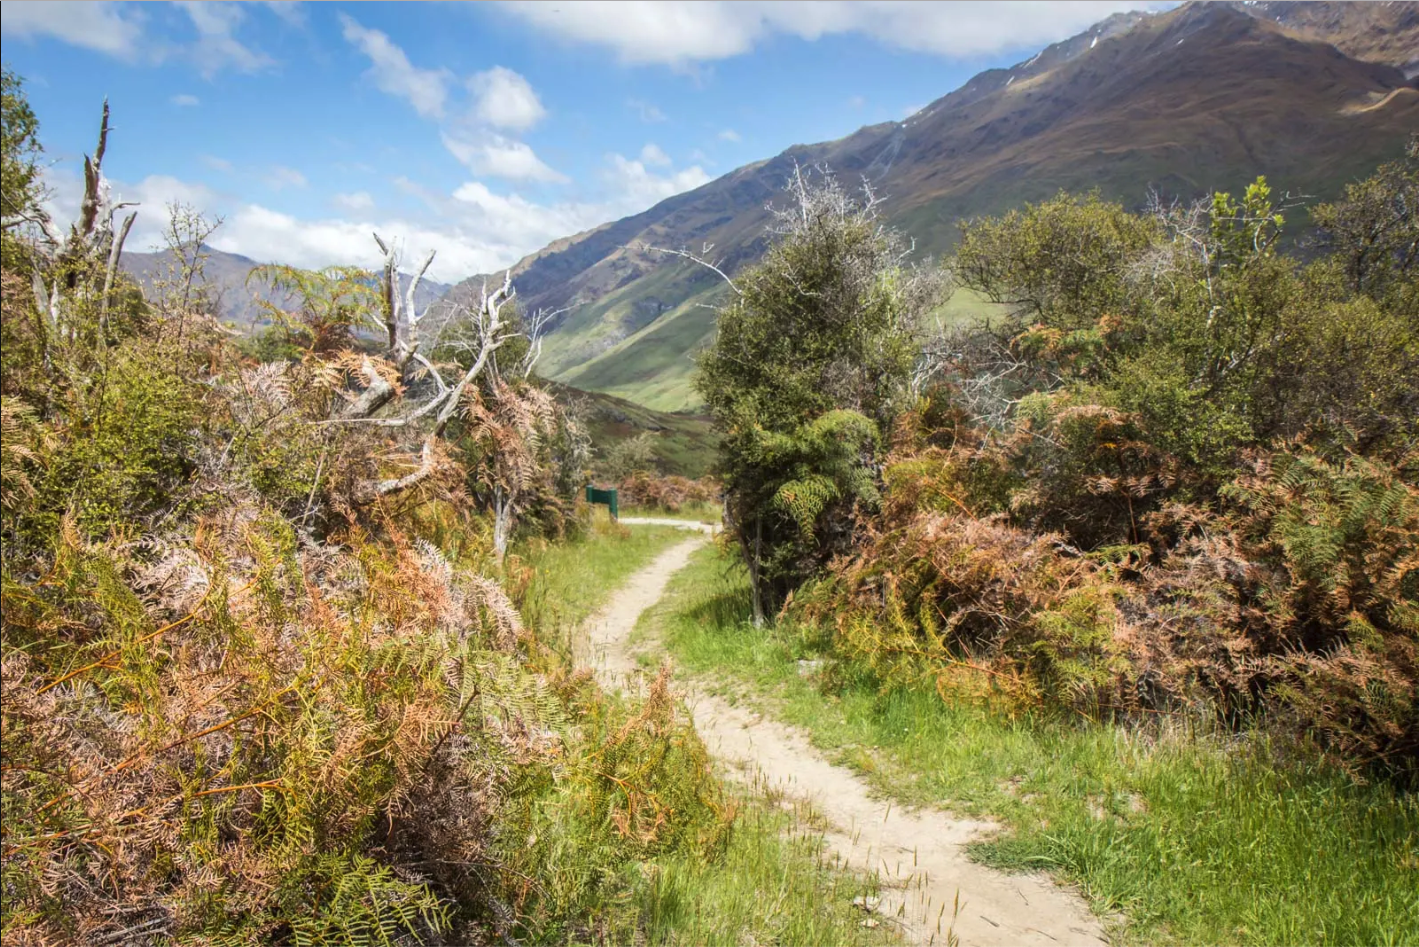 View of Rocky Mountain Hike seen on New Zealand Adventure Trek Mountain Trek